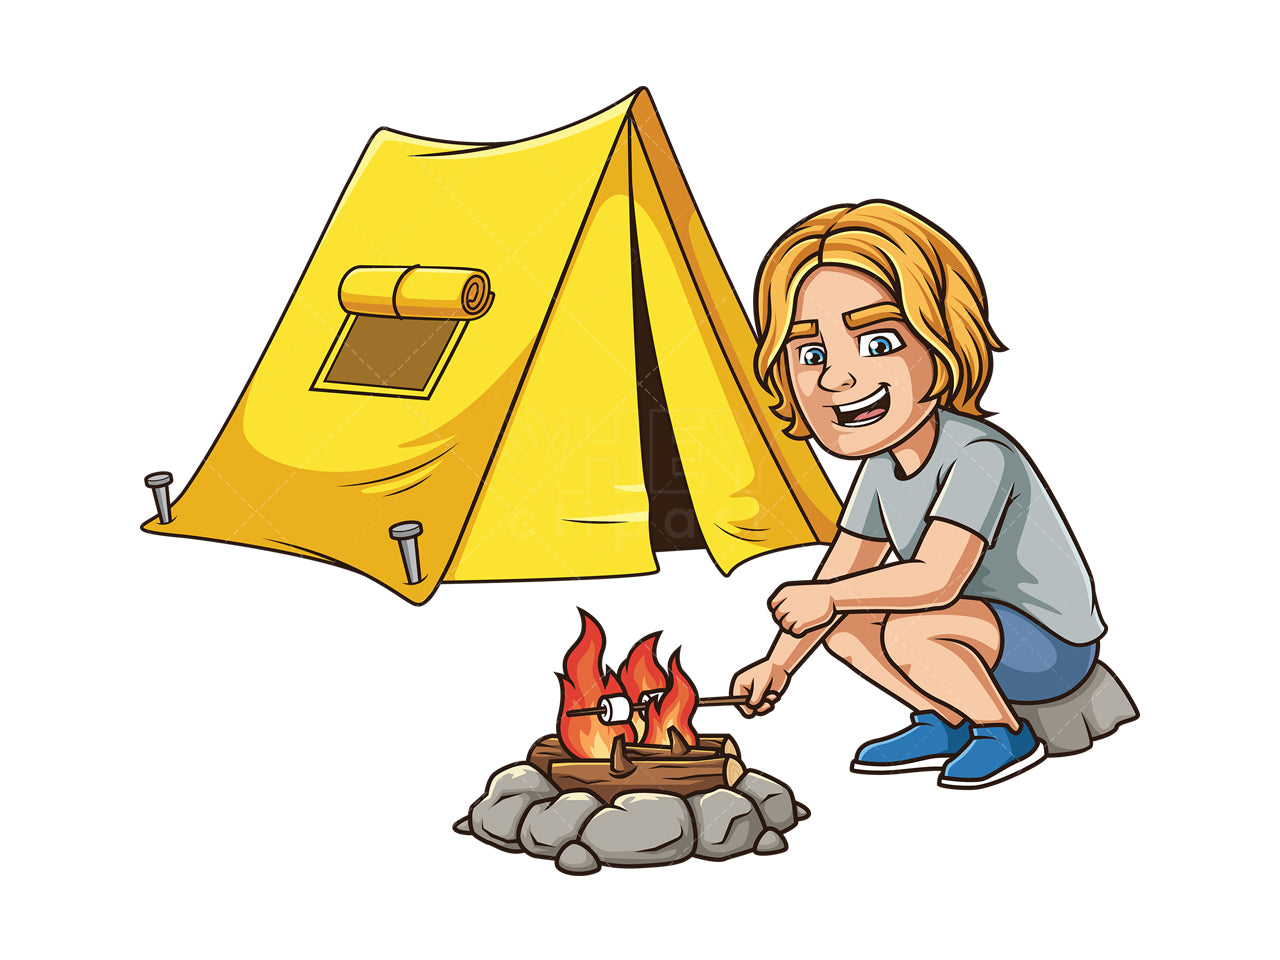 Royalty-free stock vector illustration of a caucasian man camping.